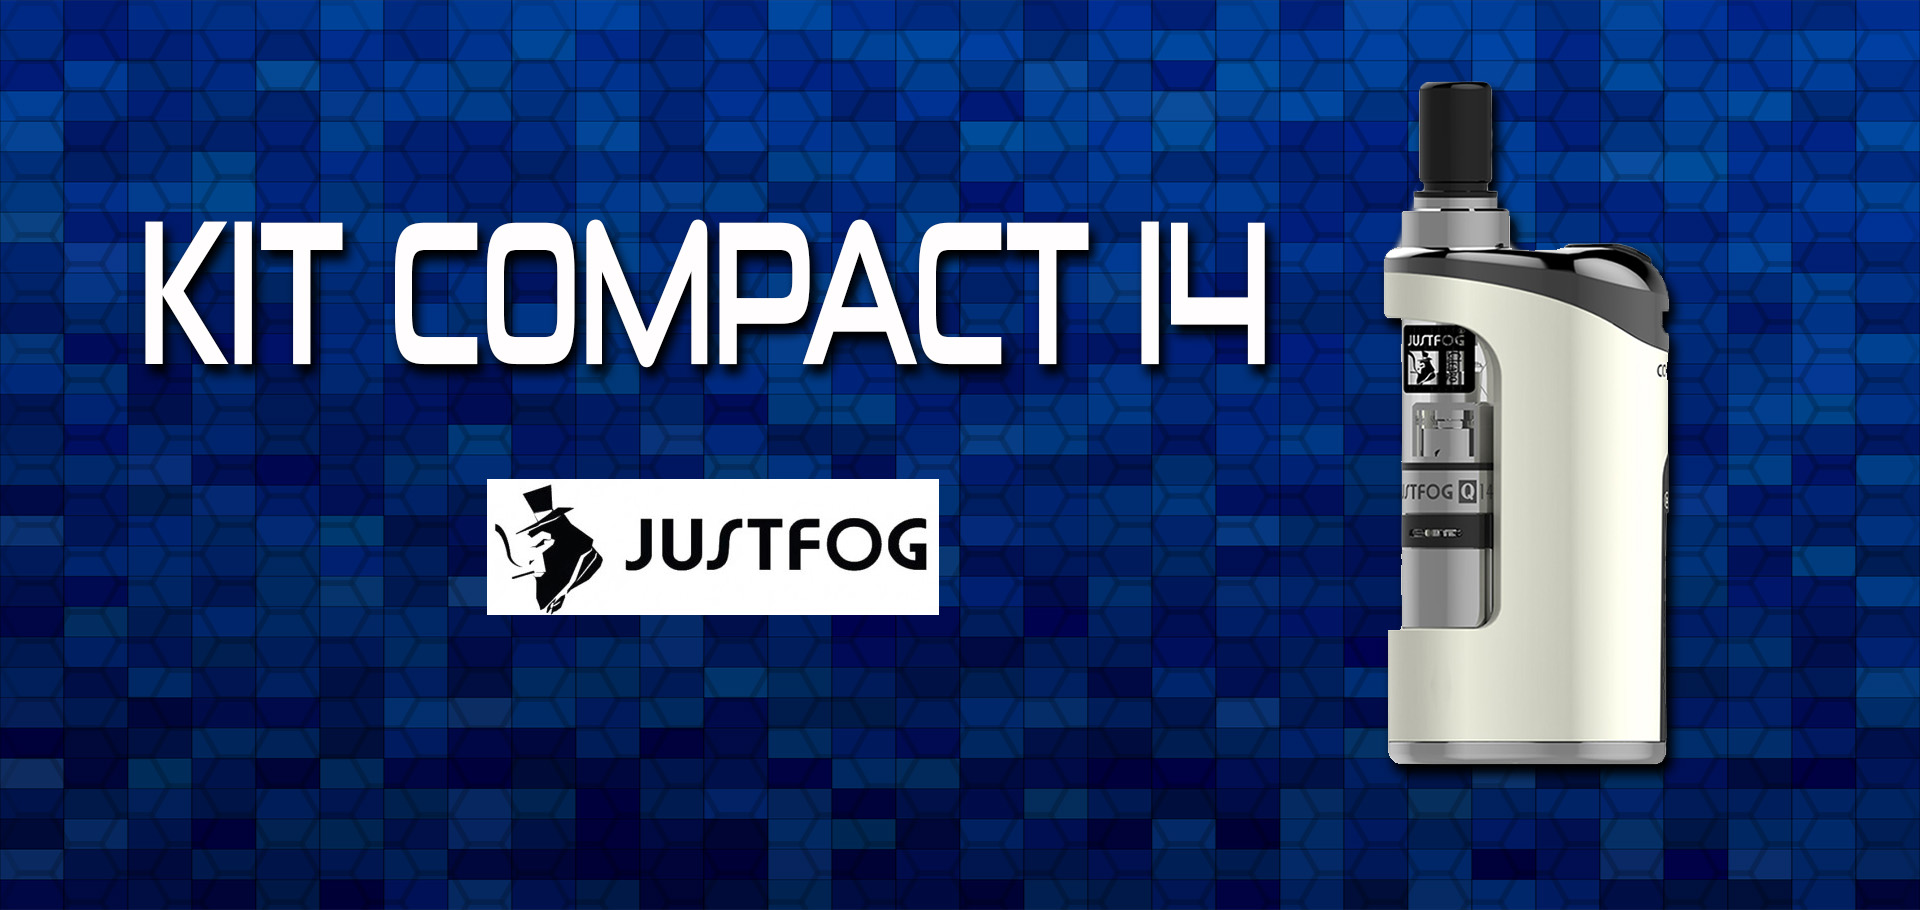 Justfog - Kit compact 14